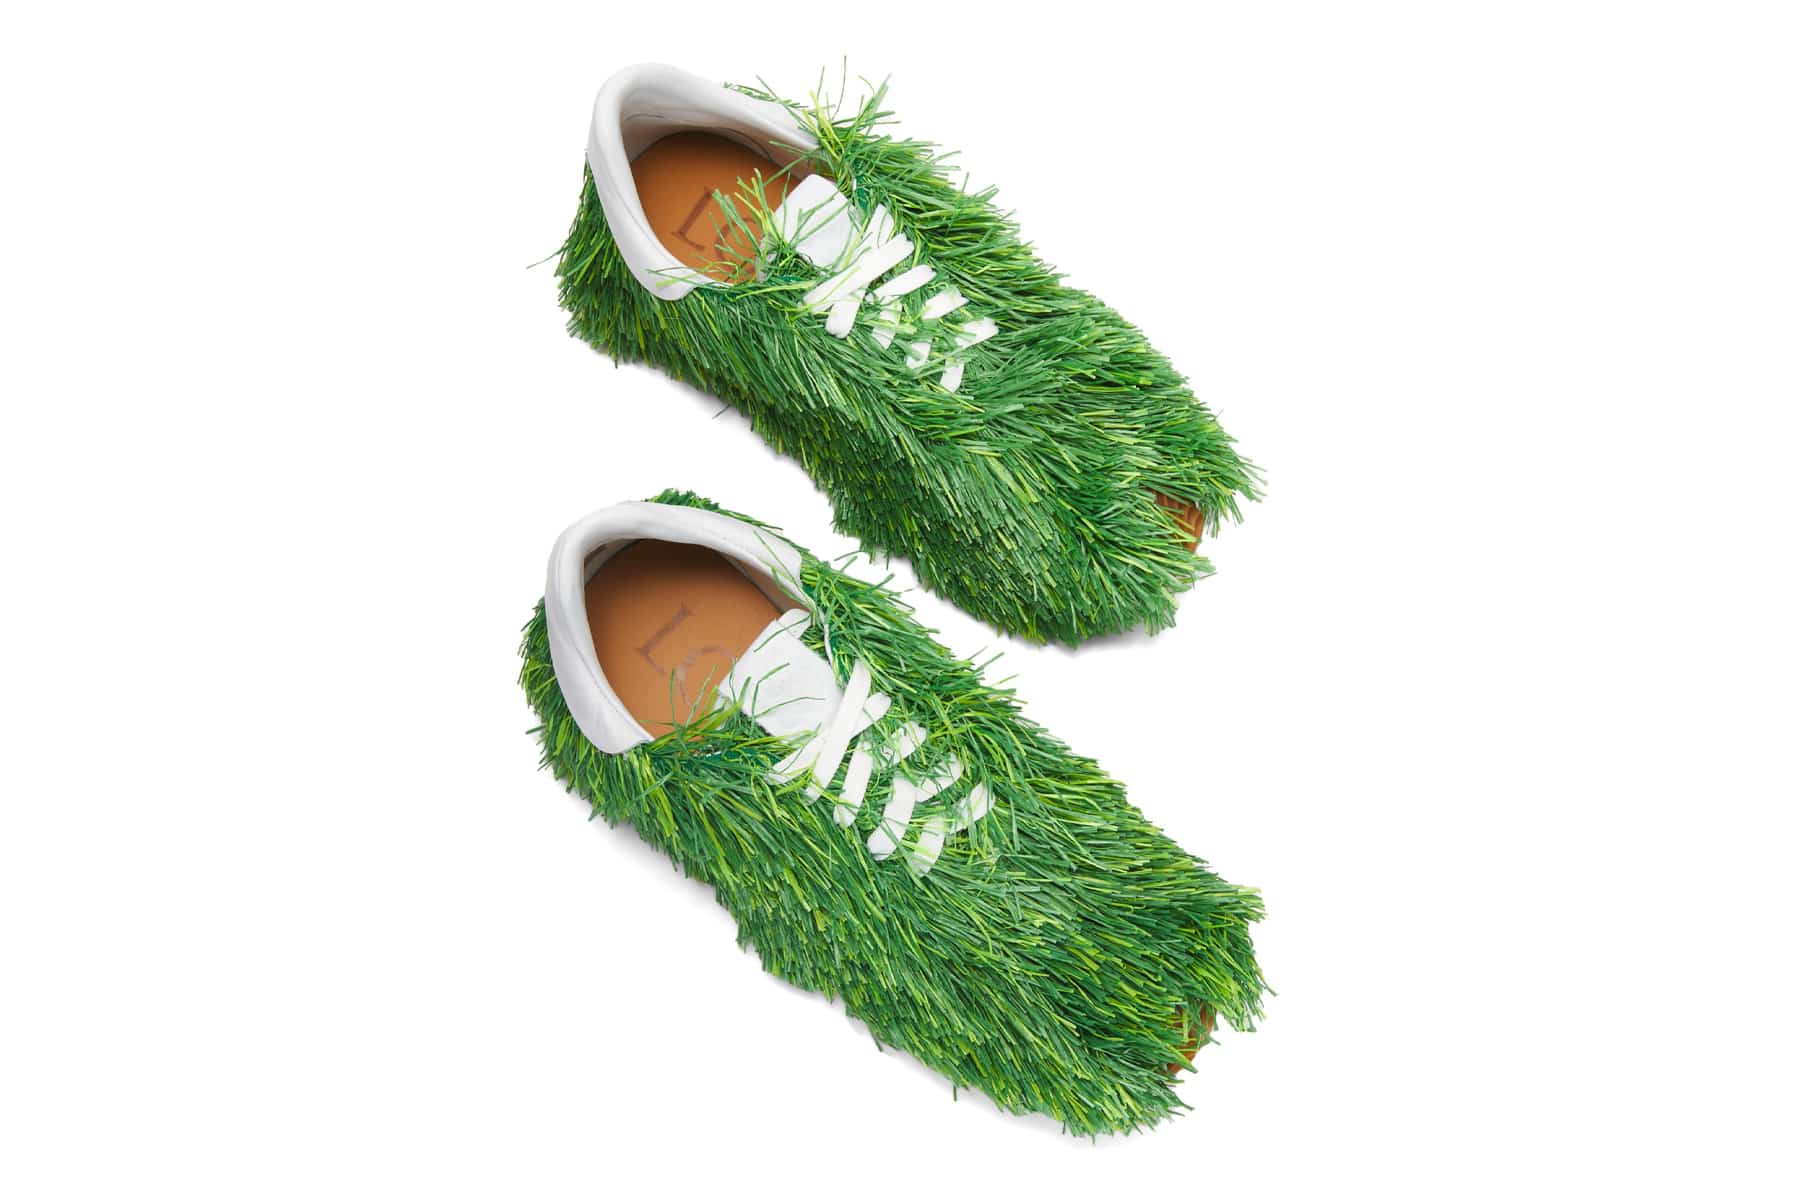 Loewe Grass Sneaker Erba sintetica